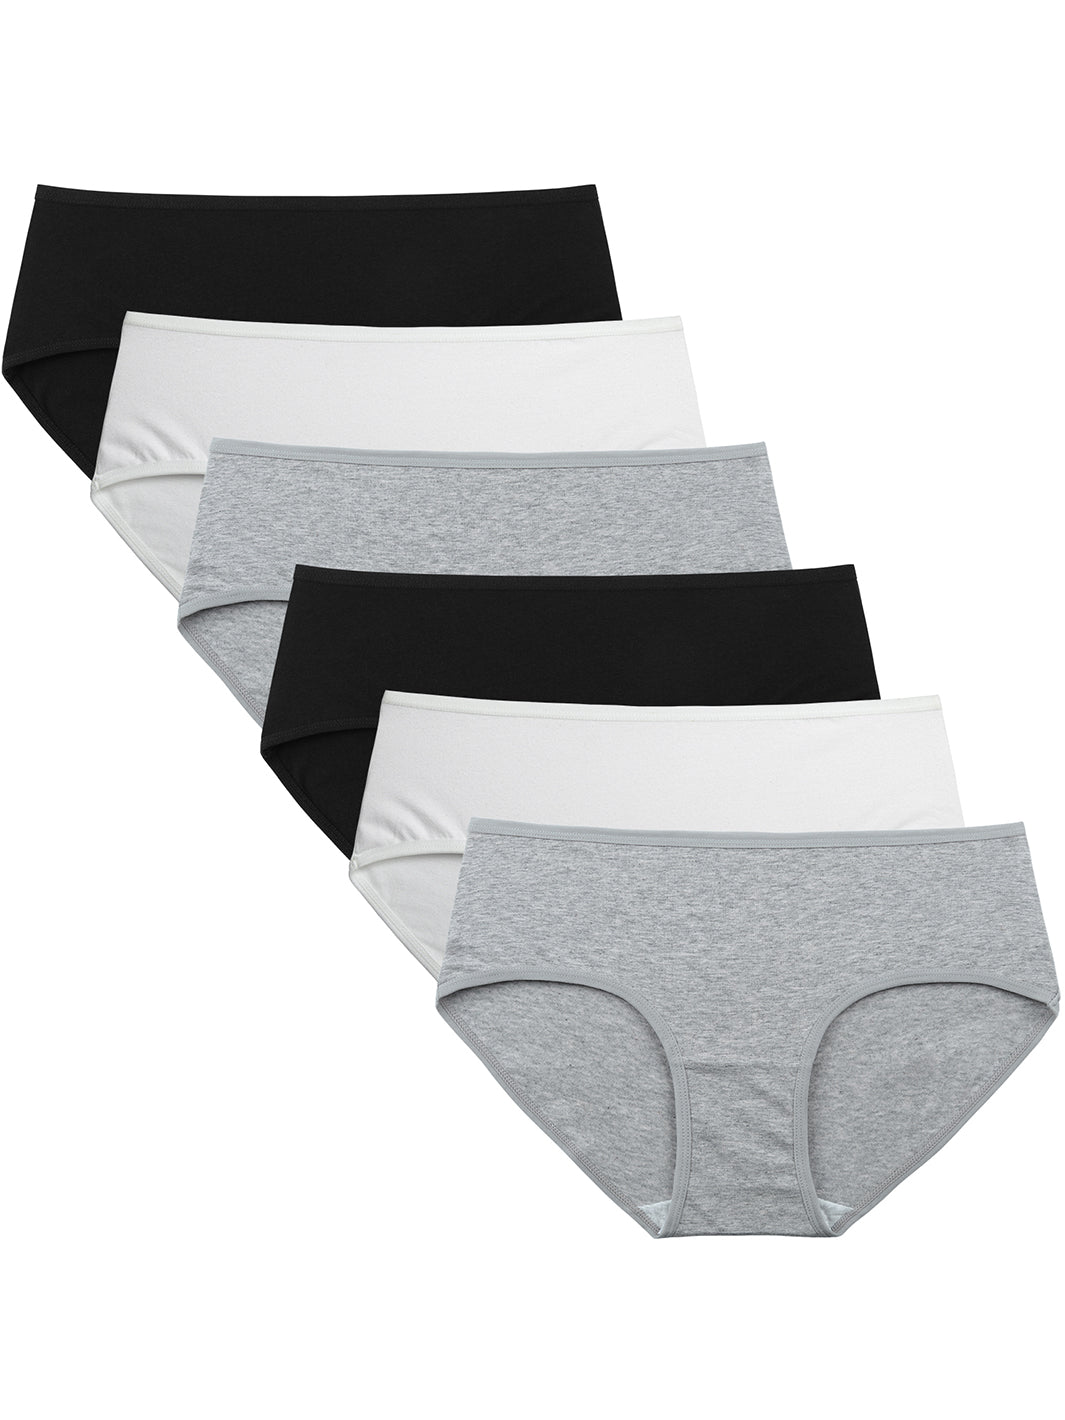 INNERSY Women's Underwear Packs Cotton Panties Hipster Regular & Plus Size  Pack of 6 (M, Dark basics with gray hem) 